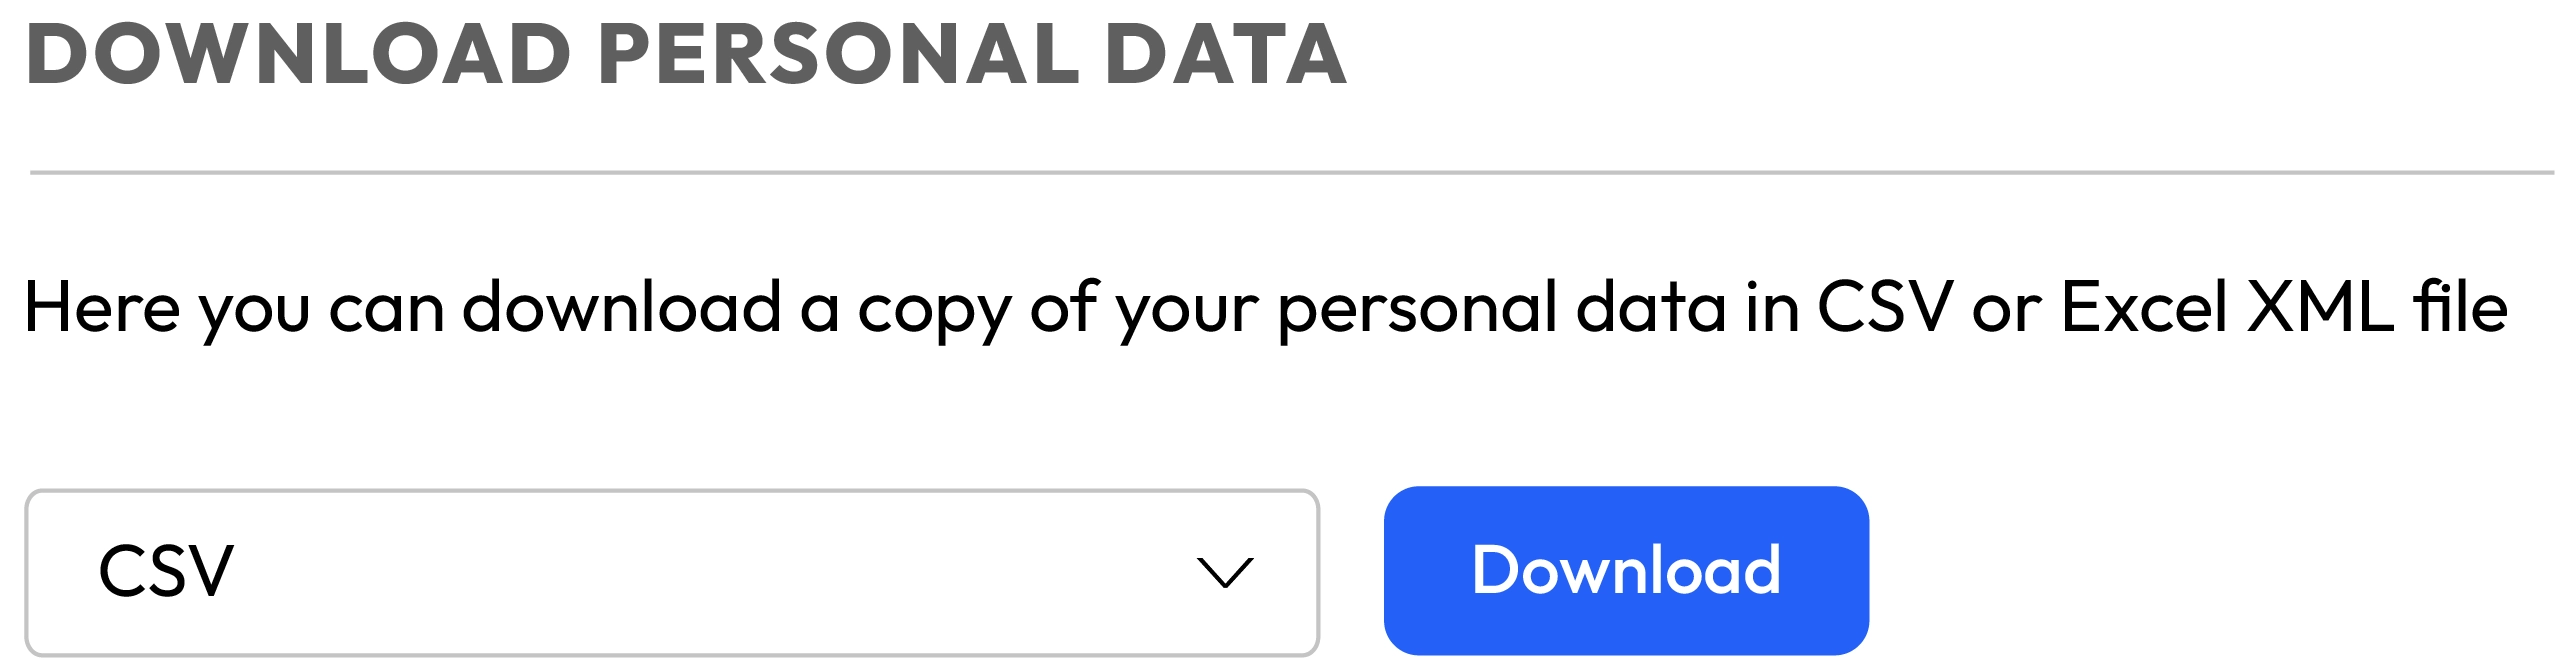 Downloadable personal data